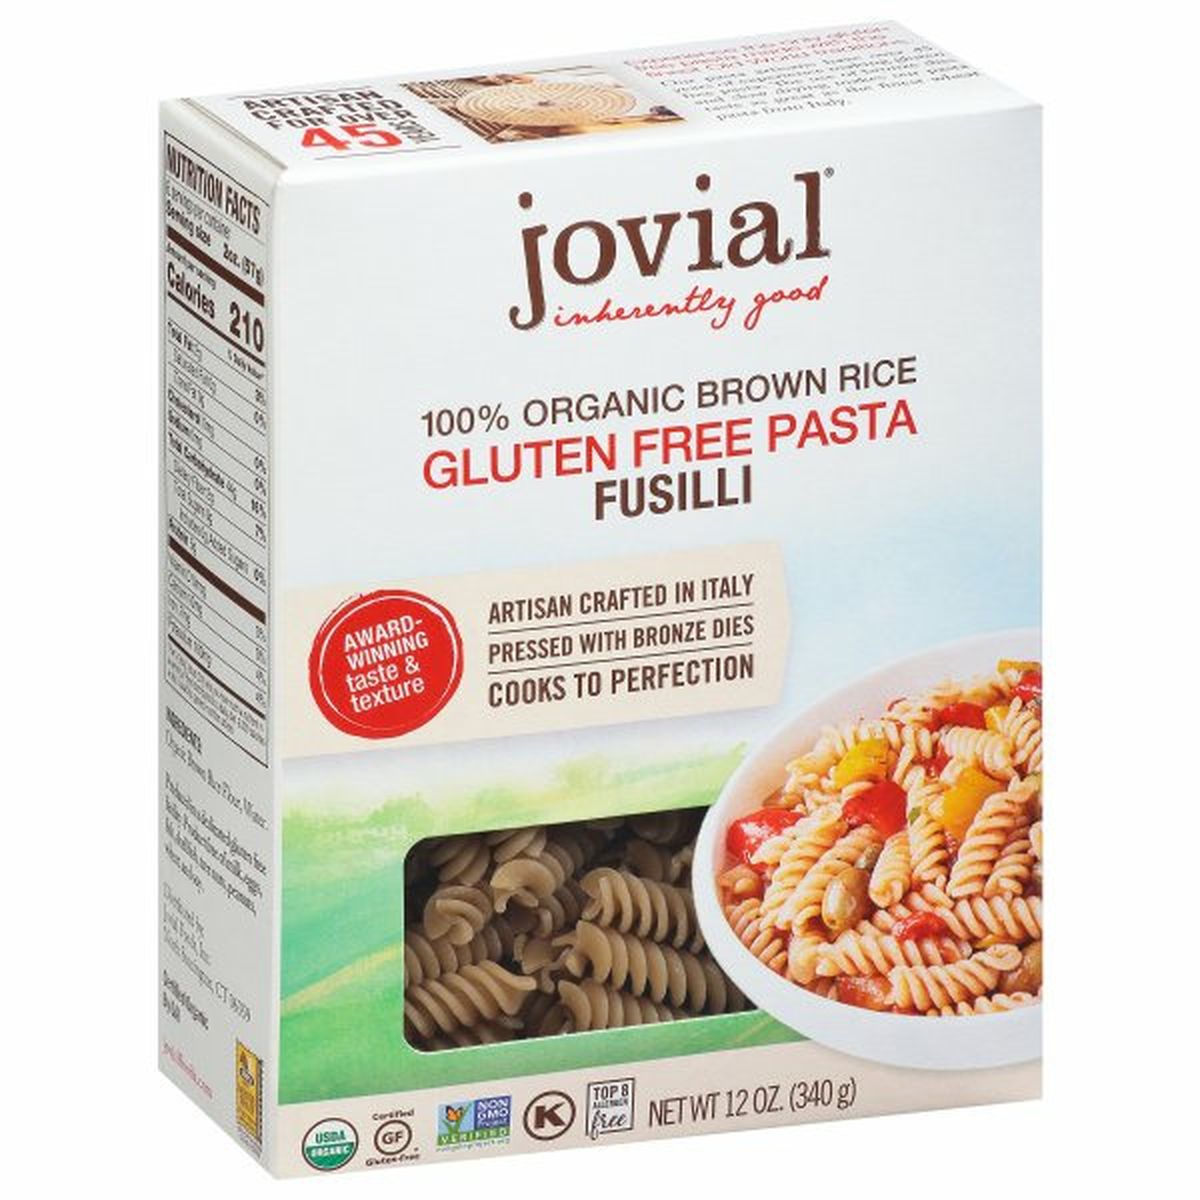 Calories in Jovial Pasta, Gluten Free, Fusilli